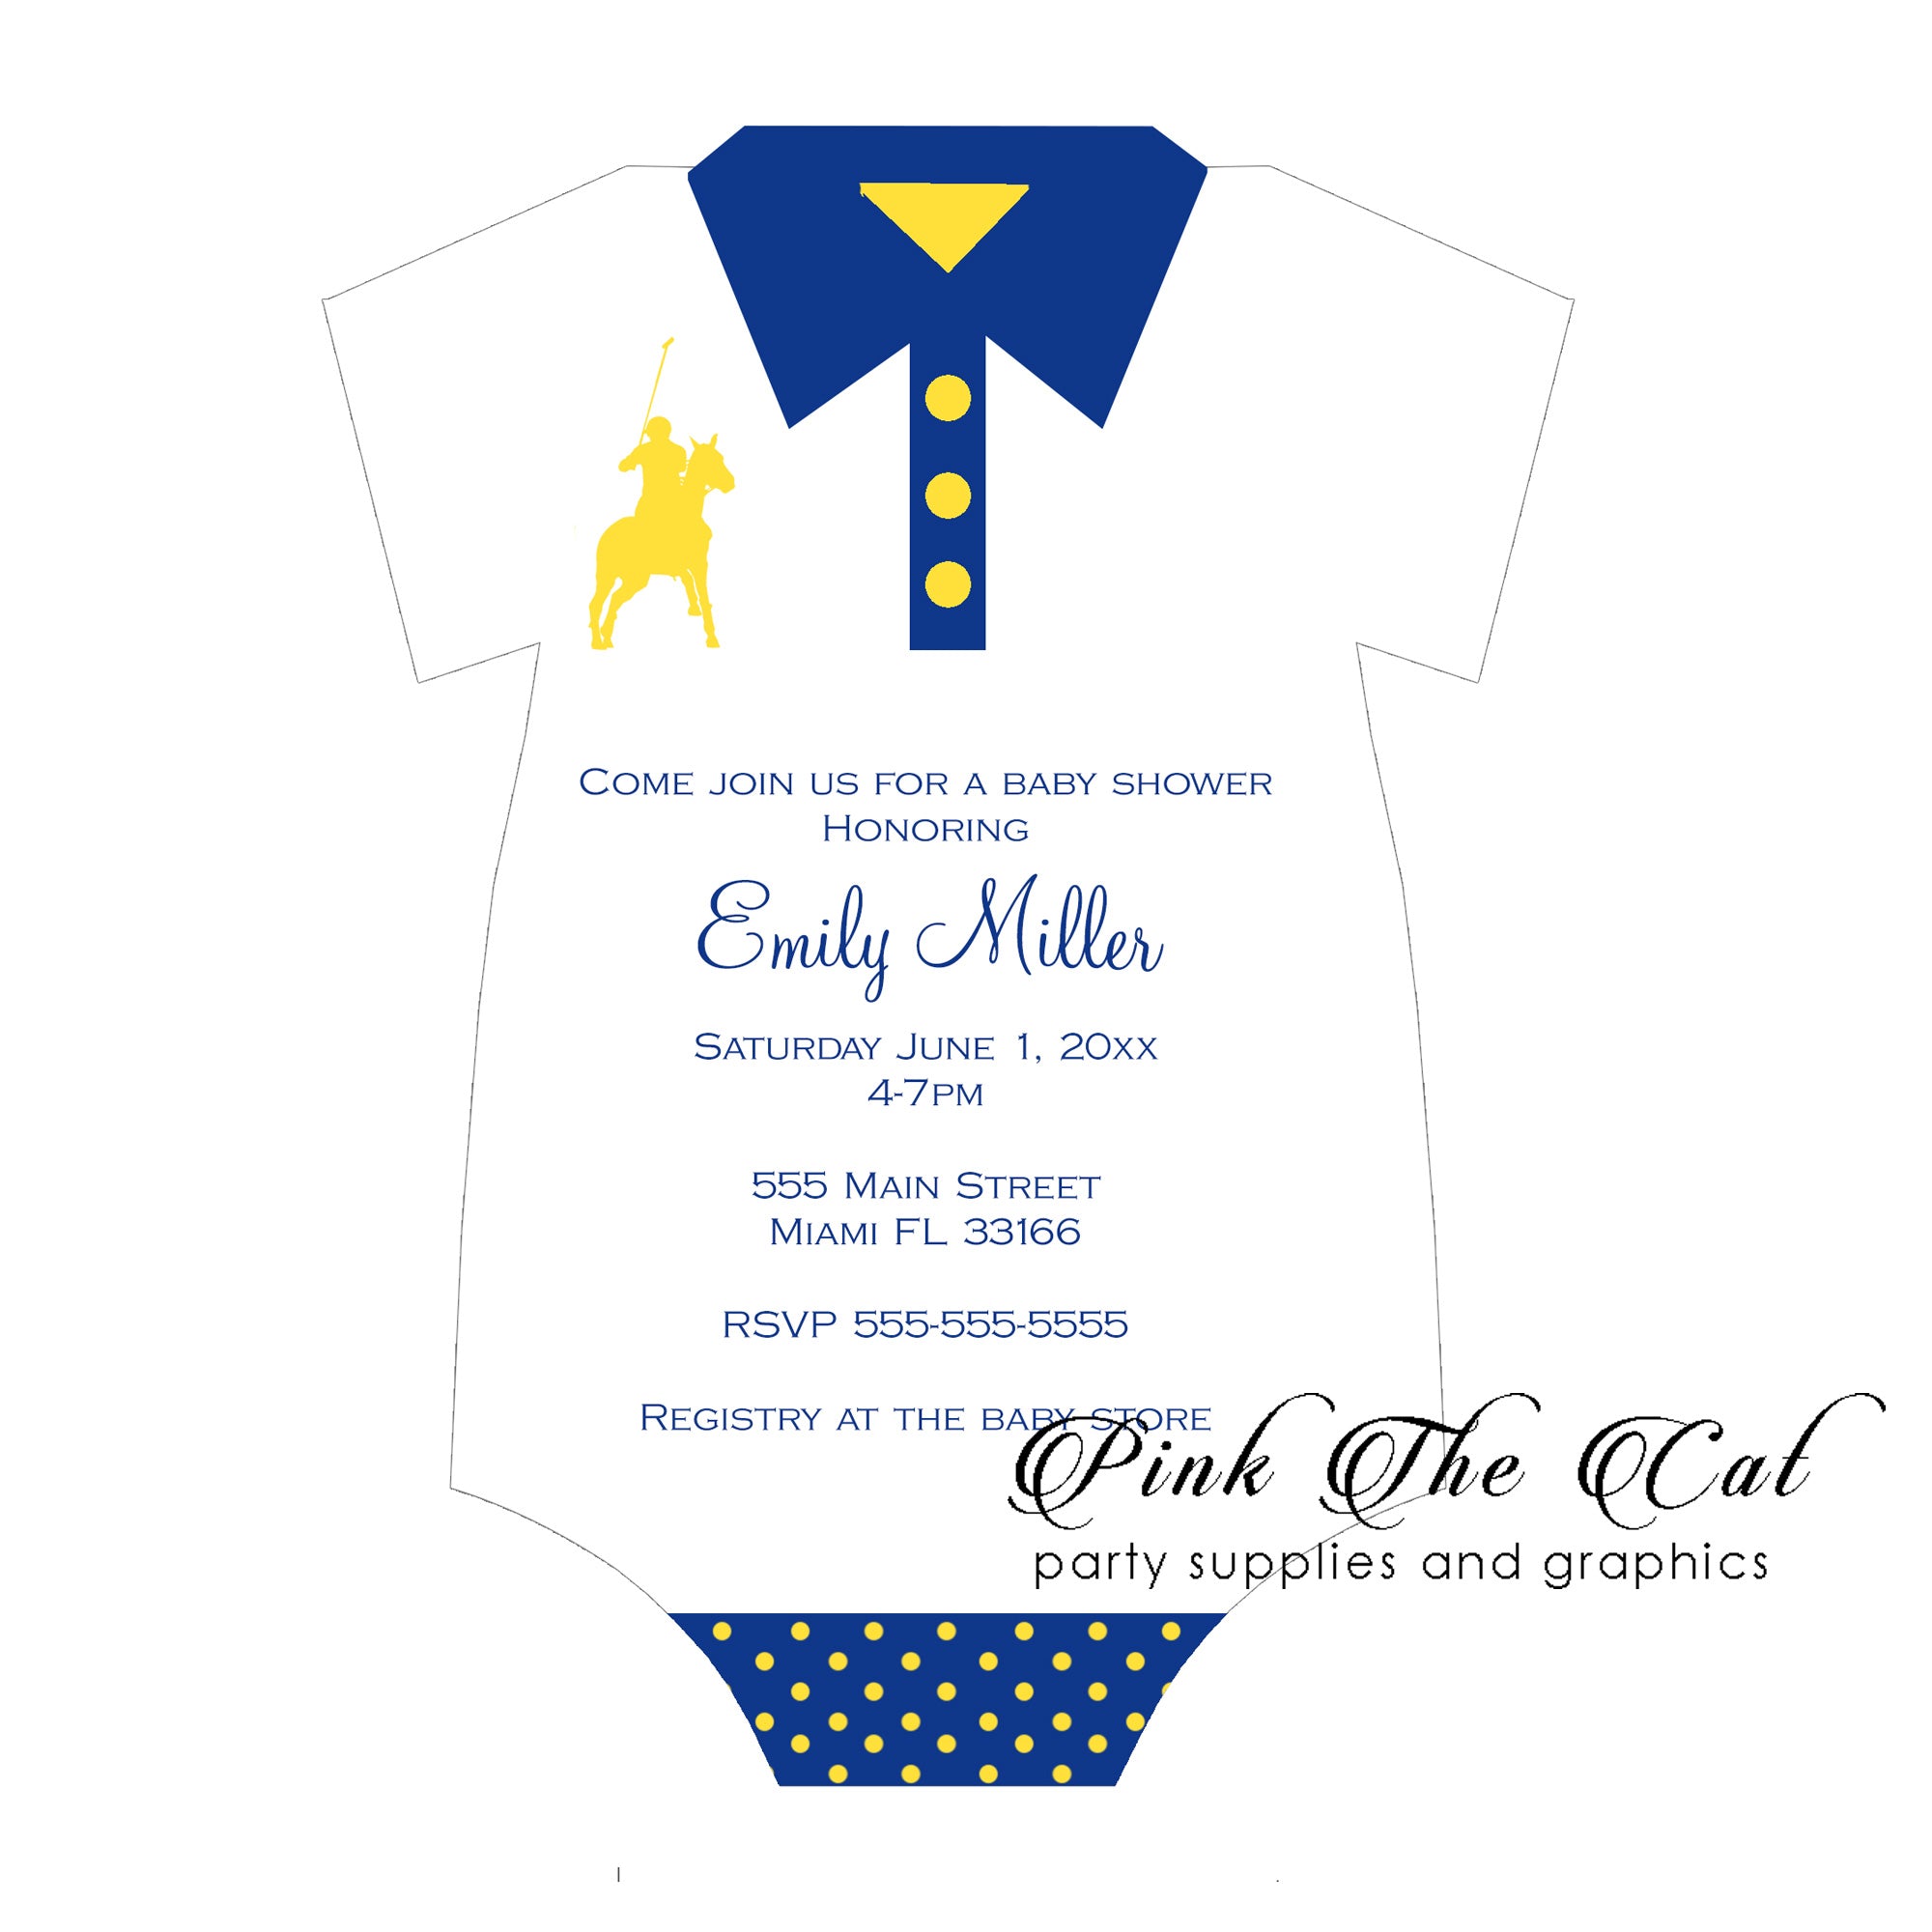 Polo invitations bodysuit royal blue yellow baby shower printable